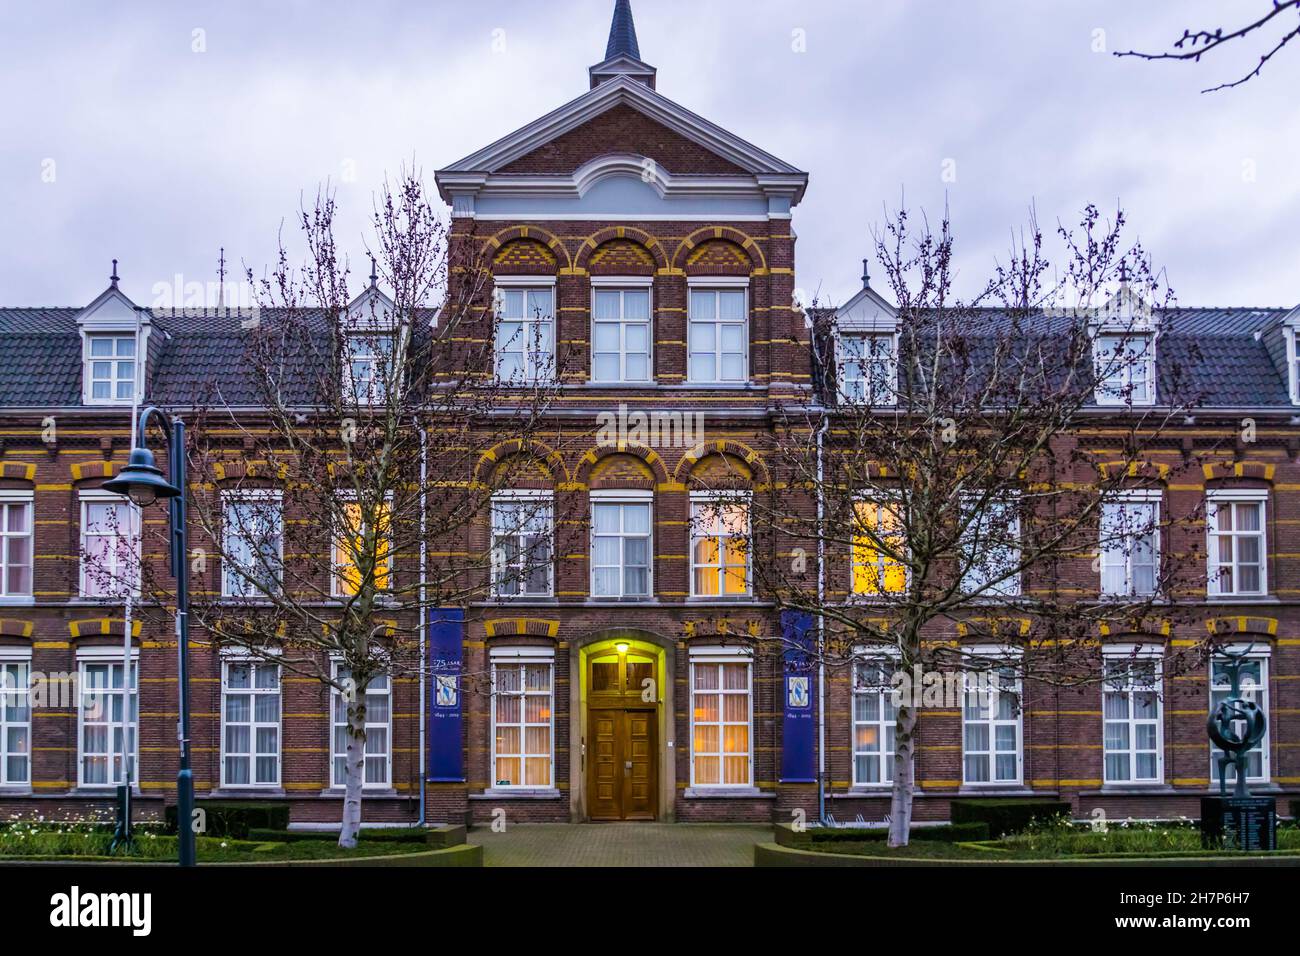 The front exterior of the Monestary in Veghel, historical architecture 1844, Kerkstraat, Veghel, Noord-Brabant, The Netherlands, 13 february, 2020 Stock Photo